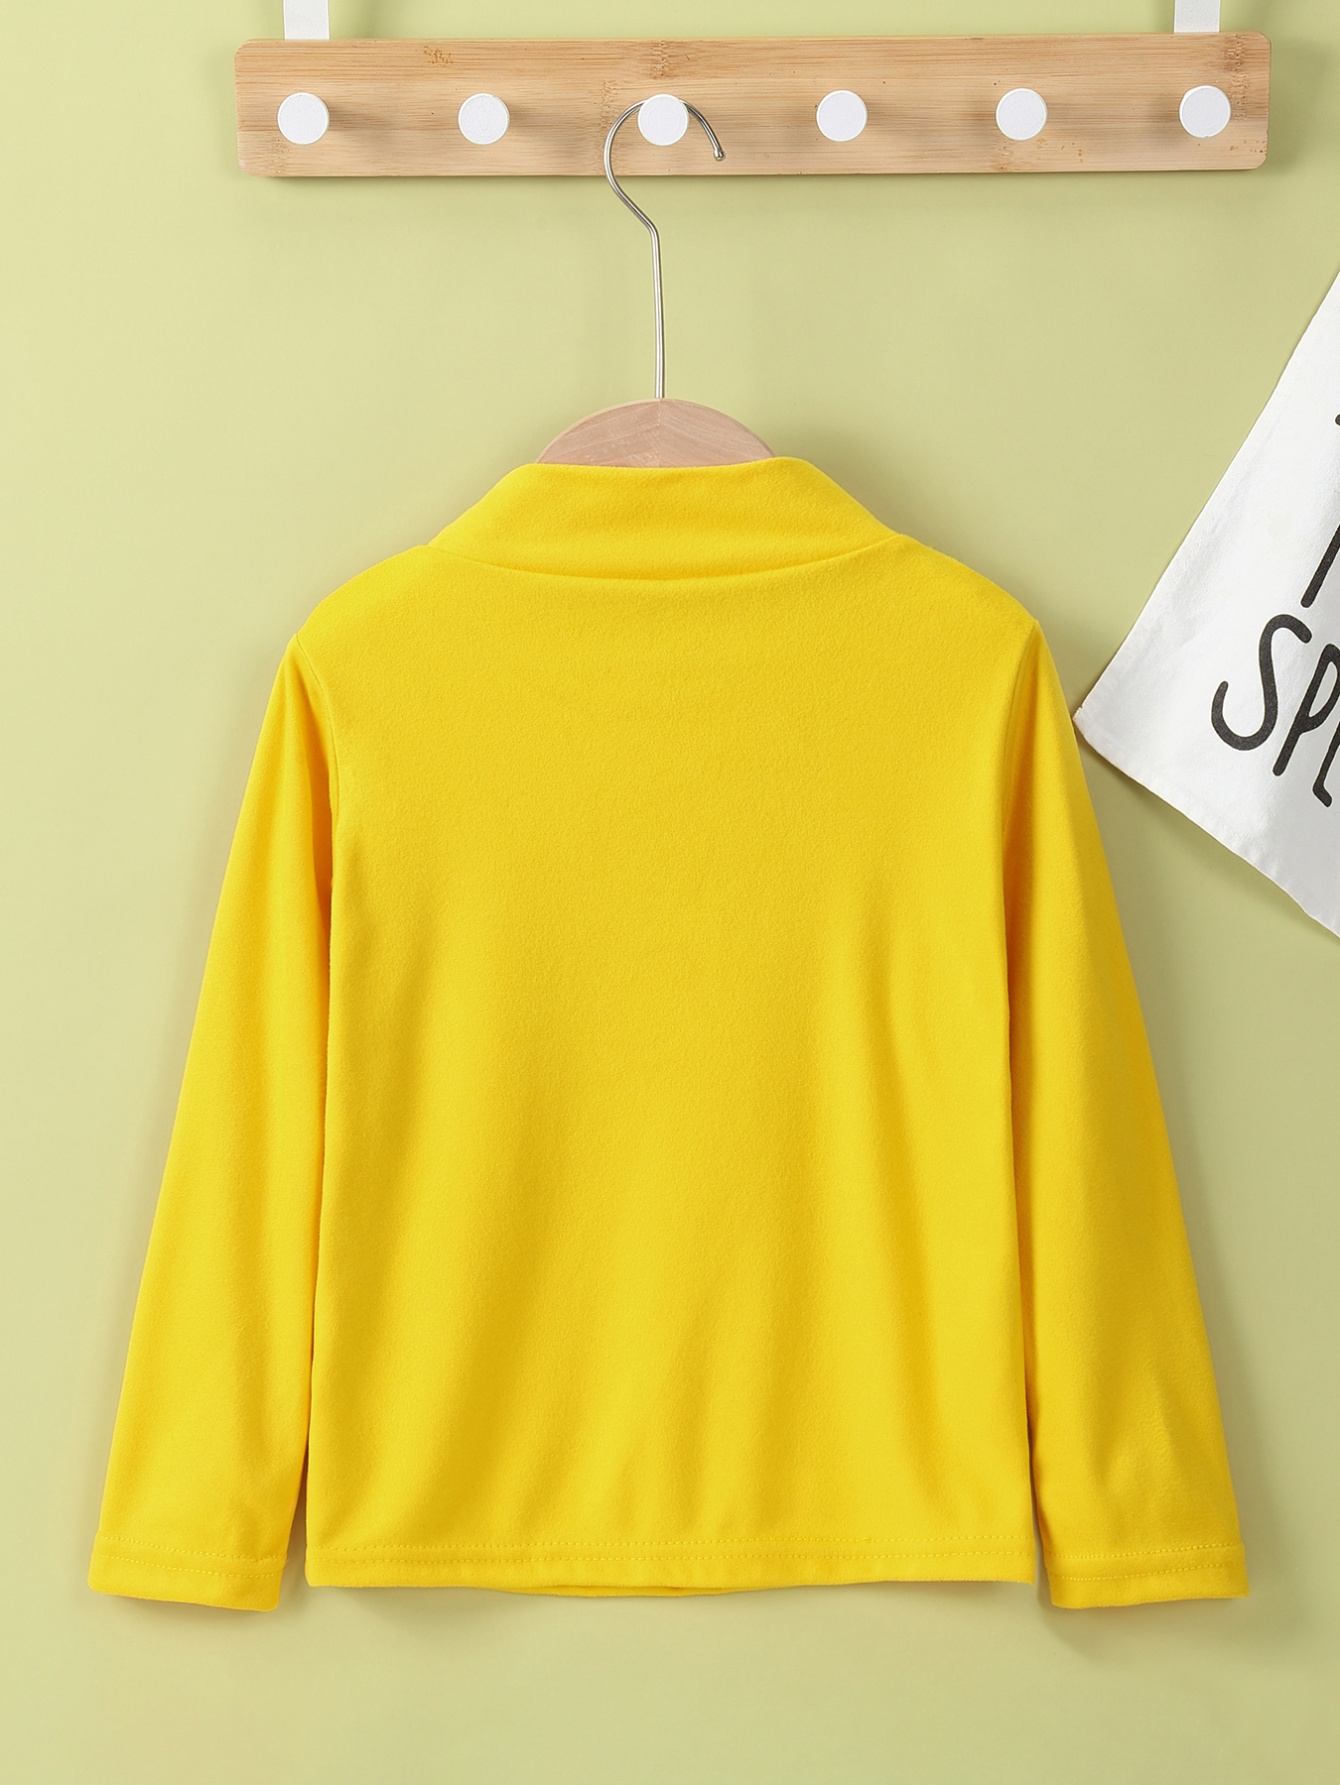 Buy Yellow Long Sleeve T-Shirt 13 years | T-shirts and shirts | Argos